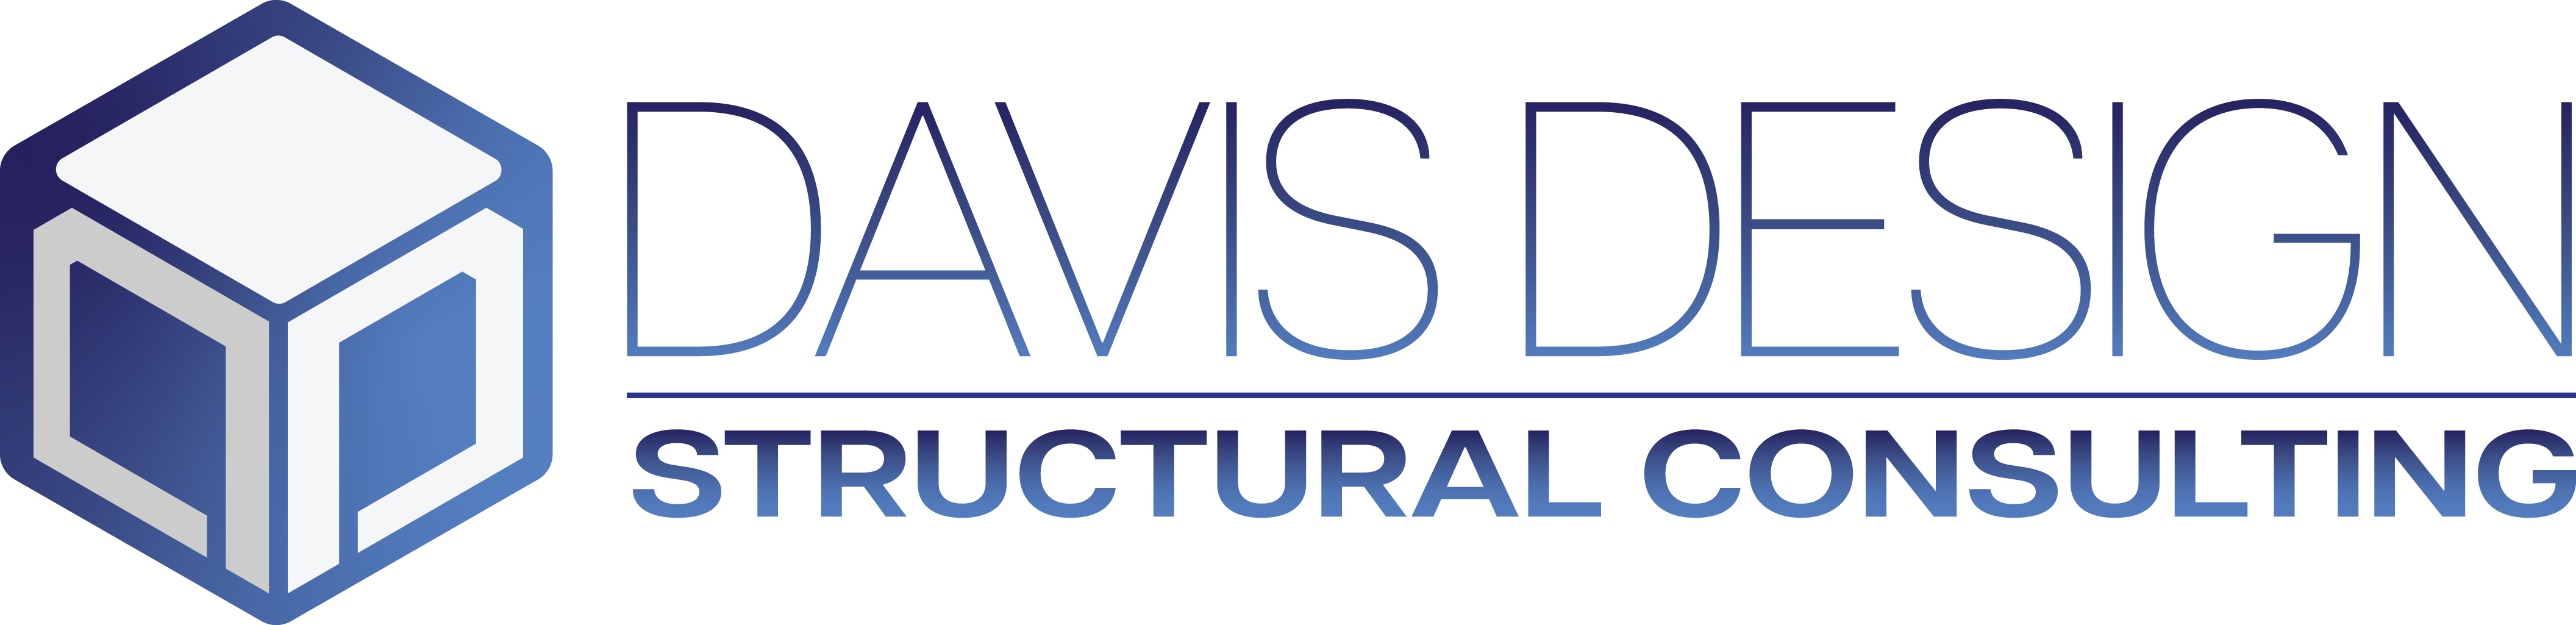 Davis Design Structural Consulting Logo